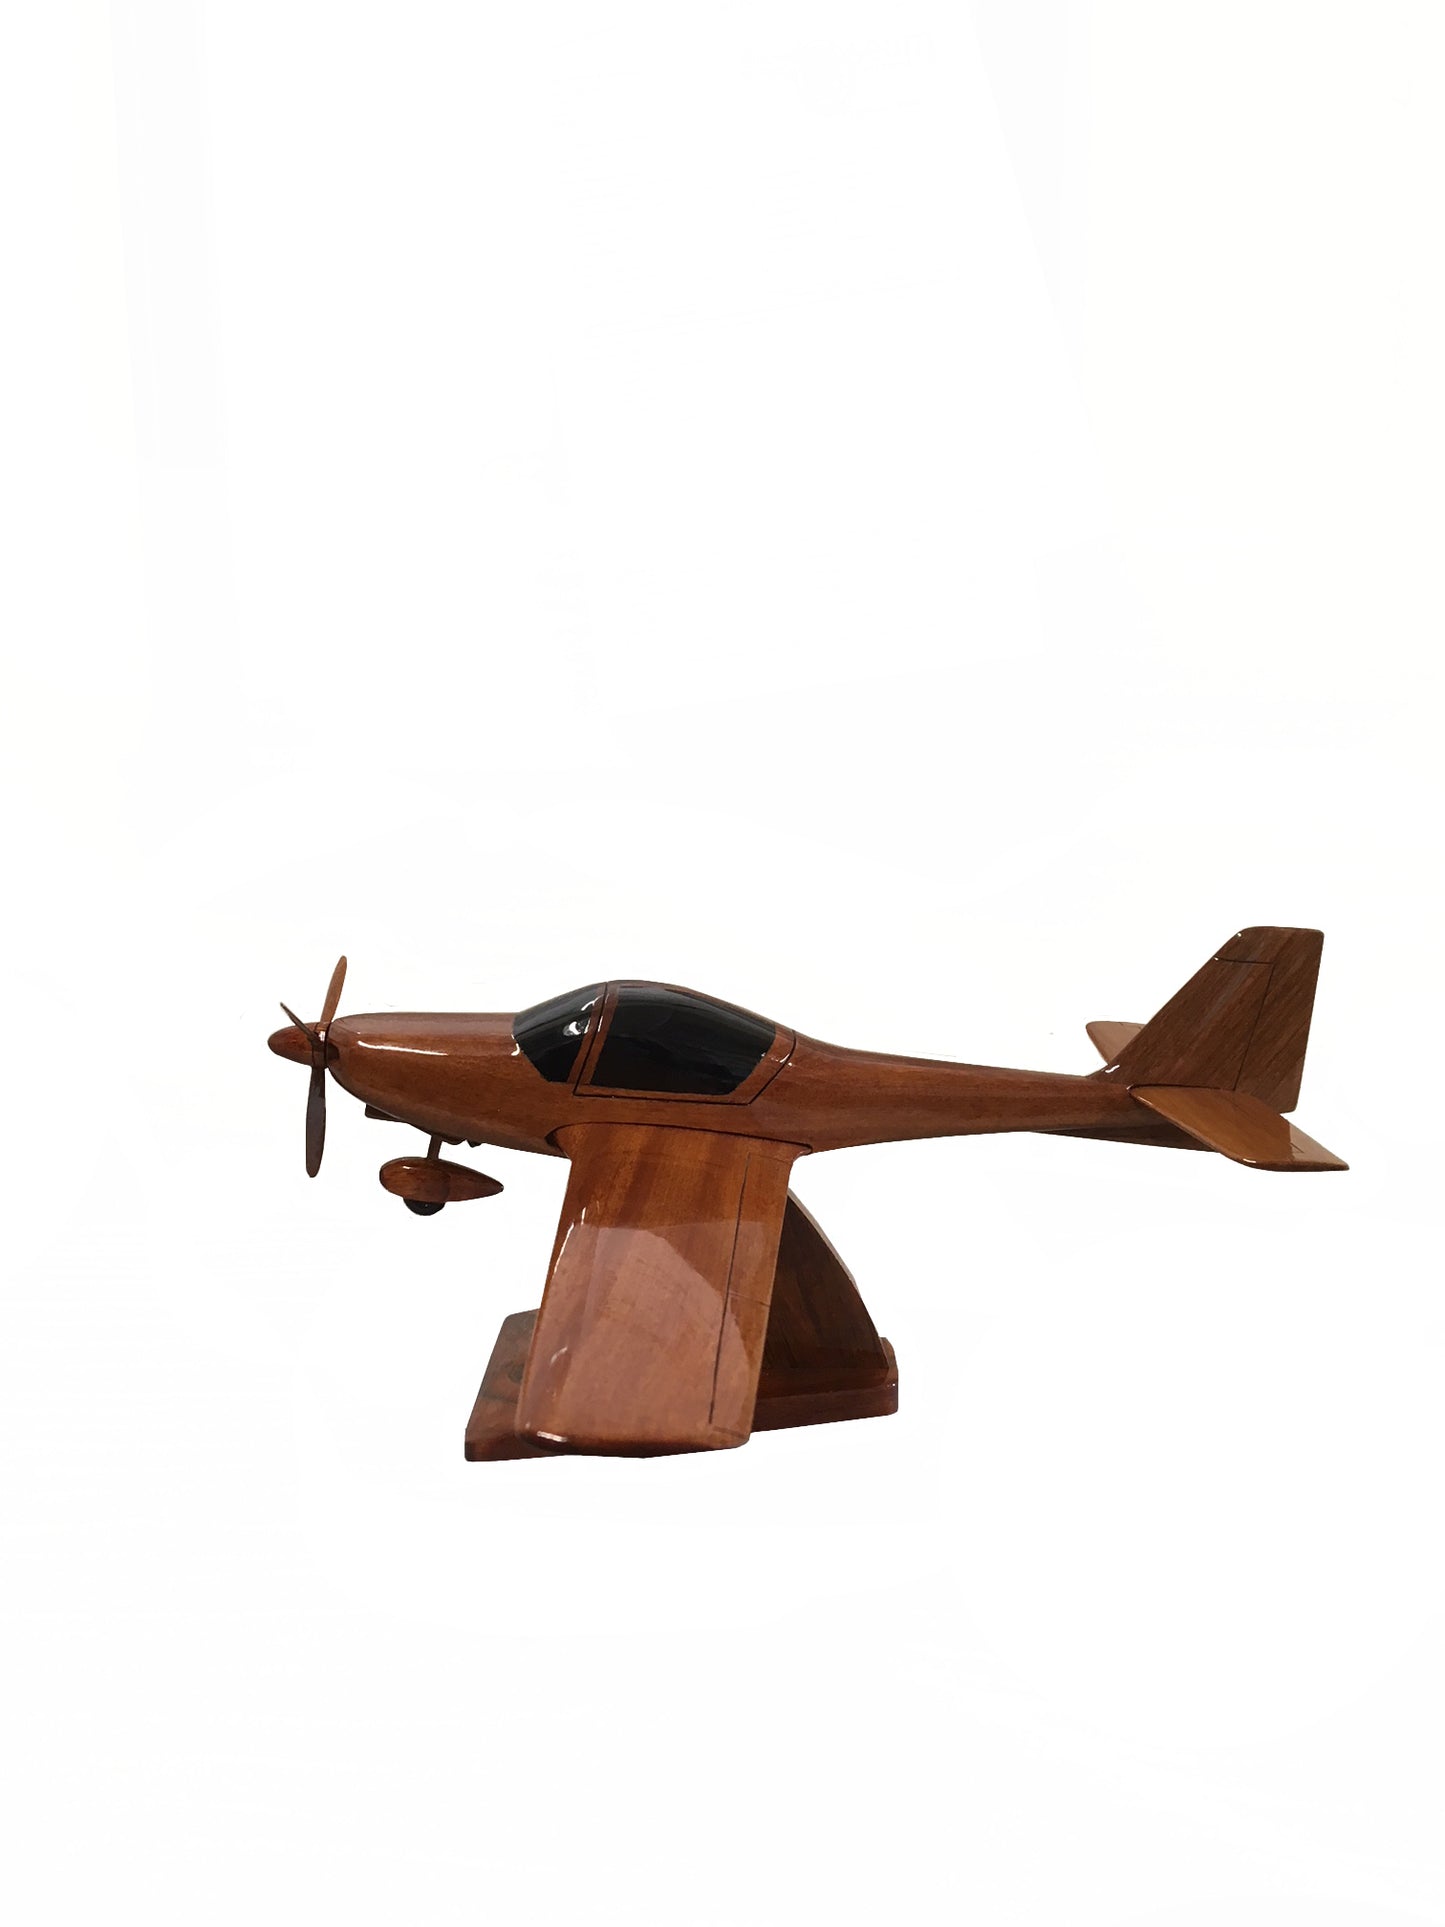 Grob G Tutor 15 Royal Air Force, Royal Navy Training Aircraft Wooden Desktop Model.